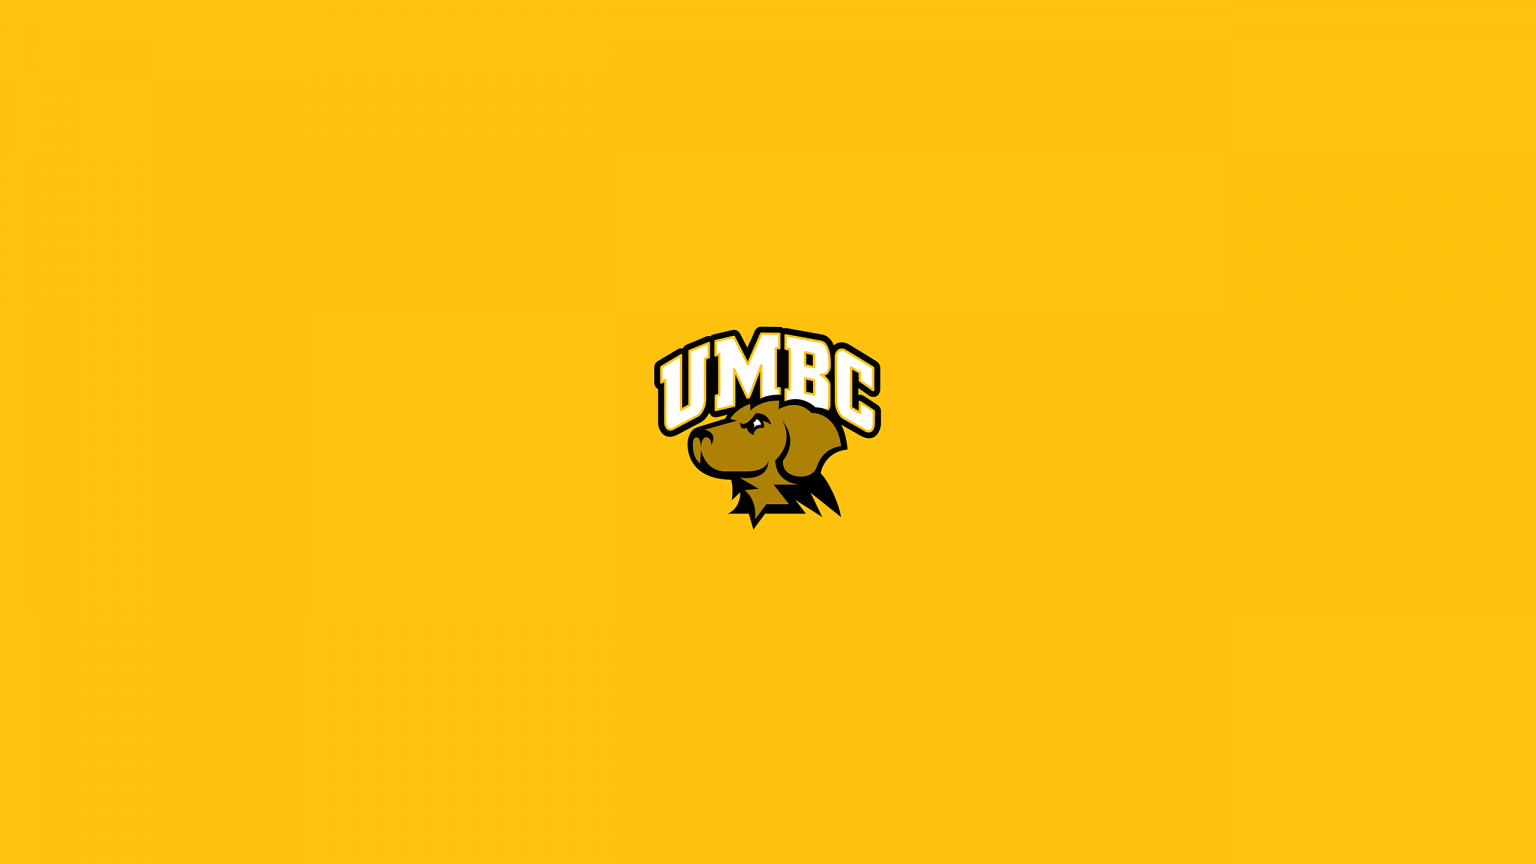 UMBC Retrievers Basketball - NCAAB - Square Bettor